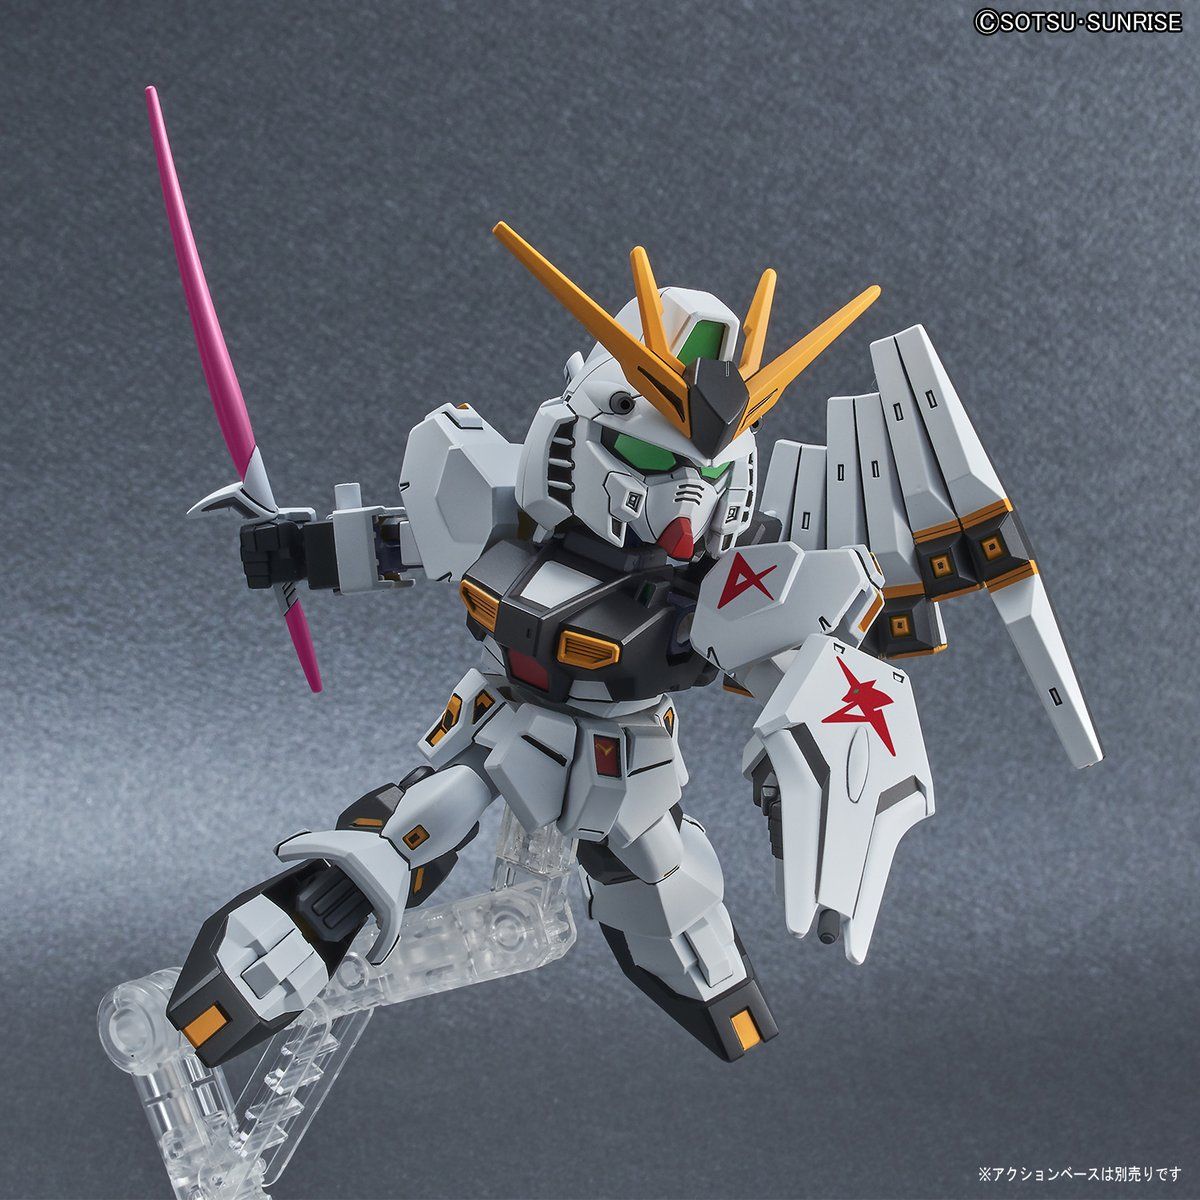 SD Gundam EX-Standard 16 Nu Gundam